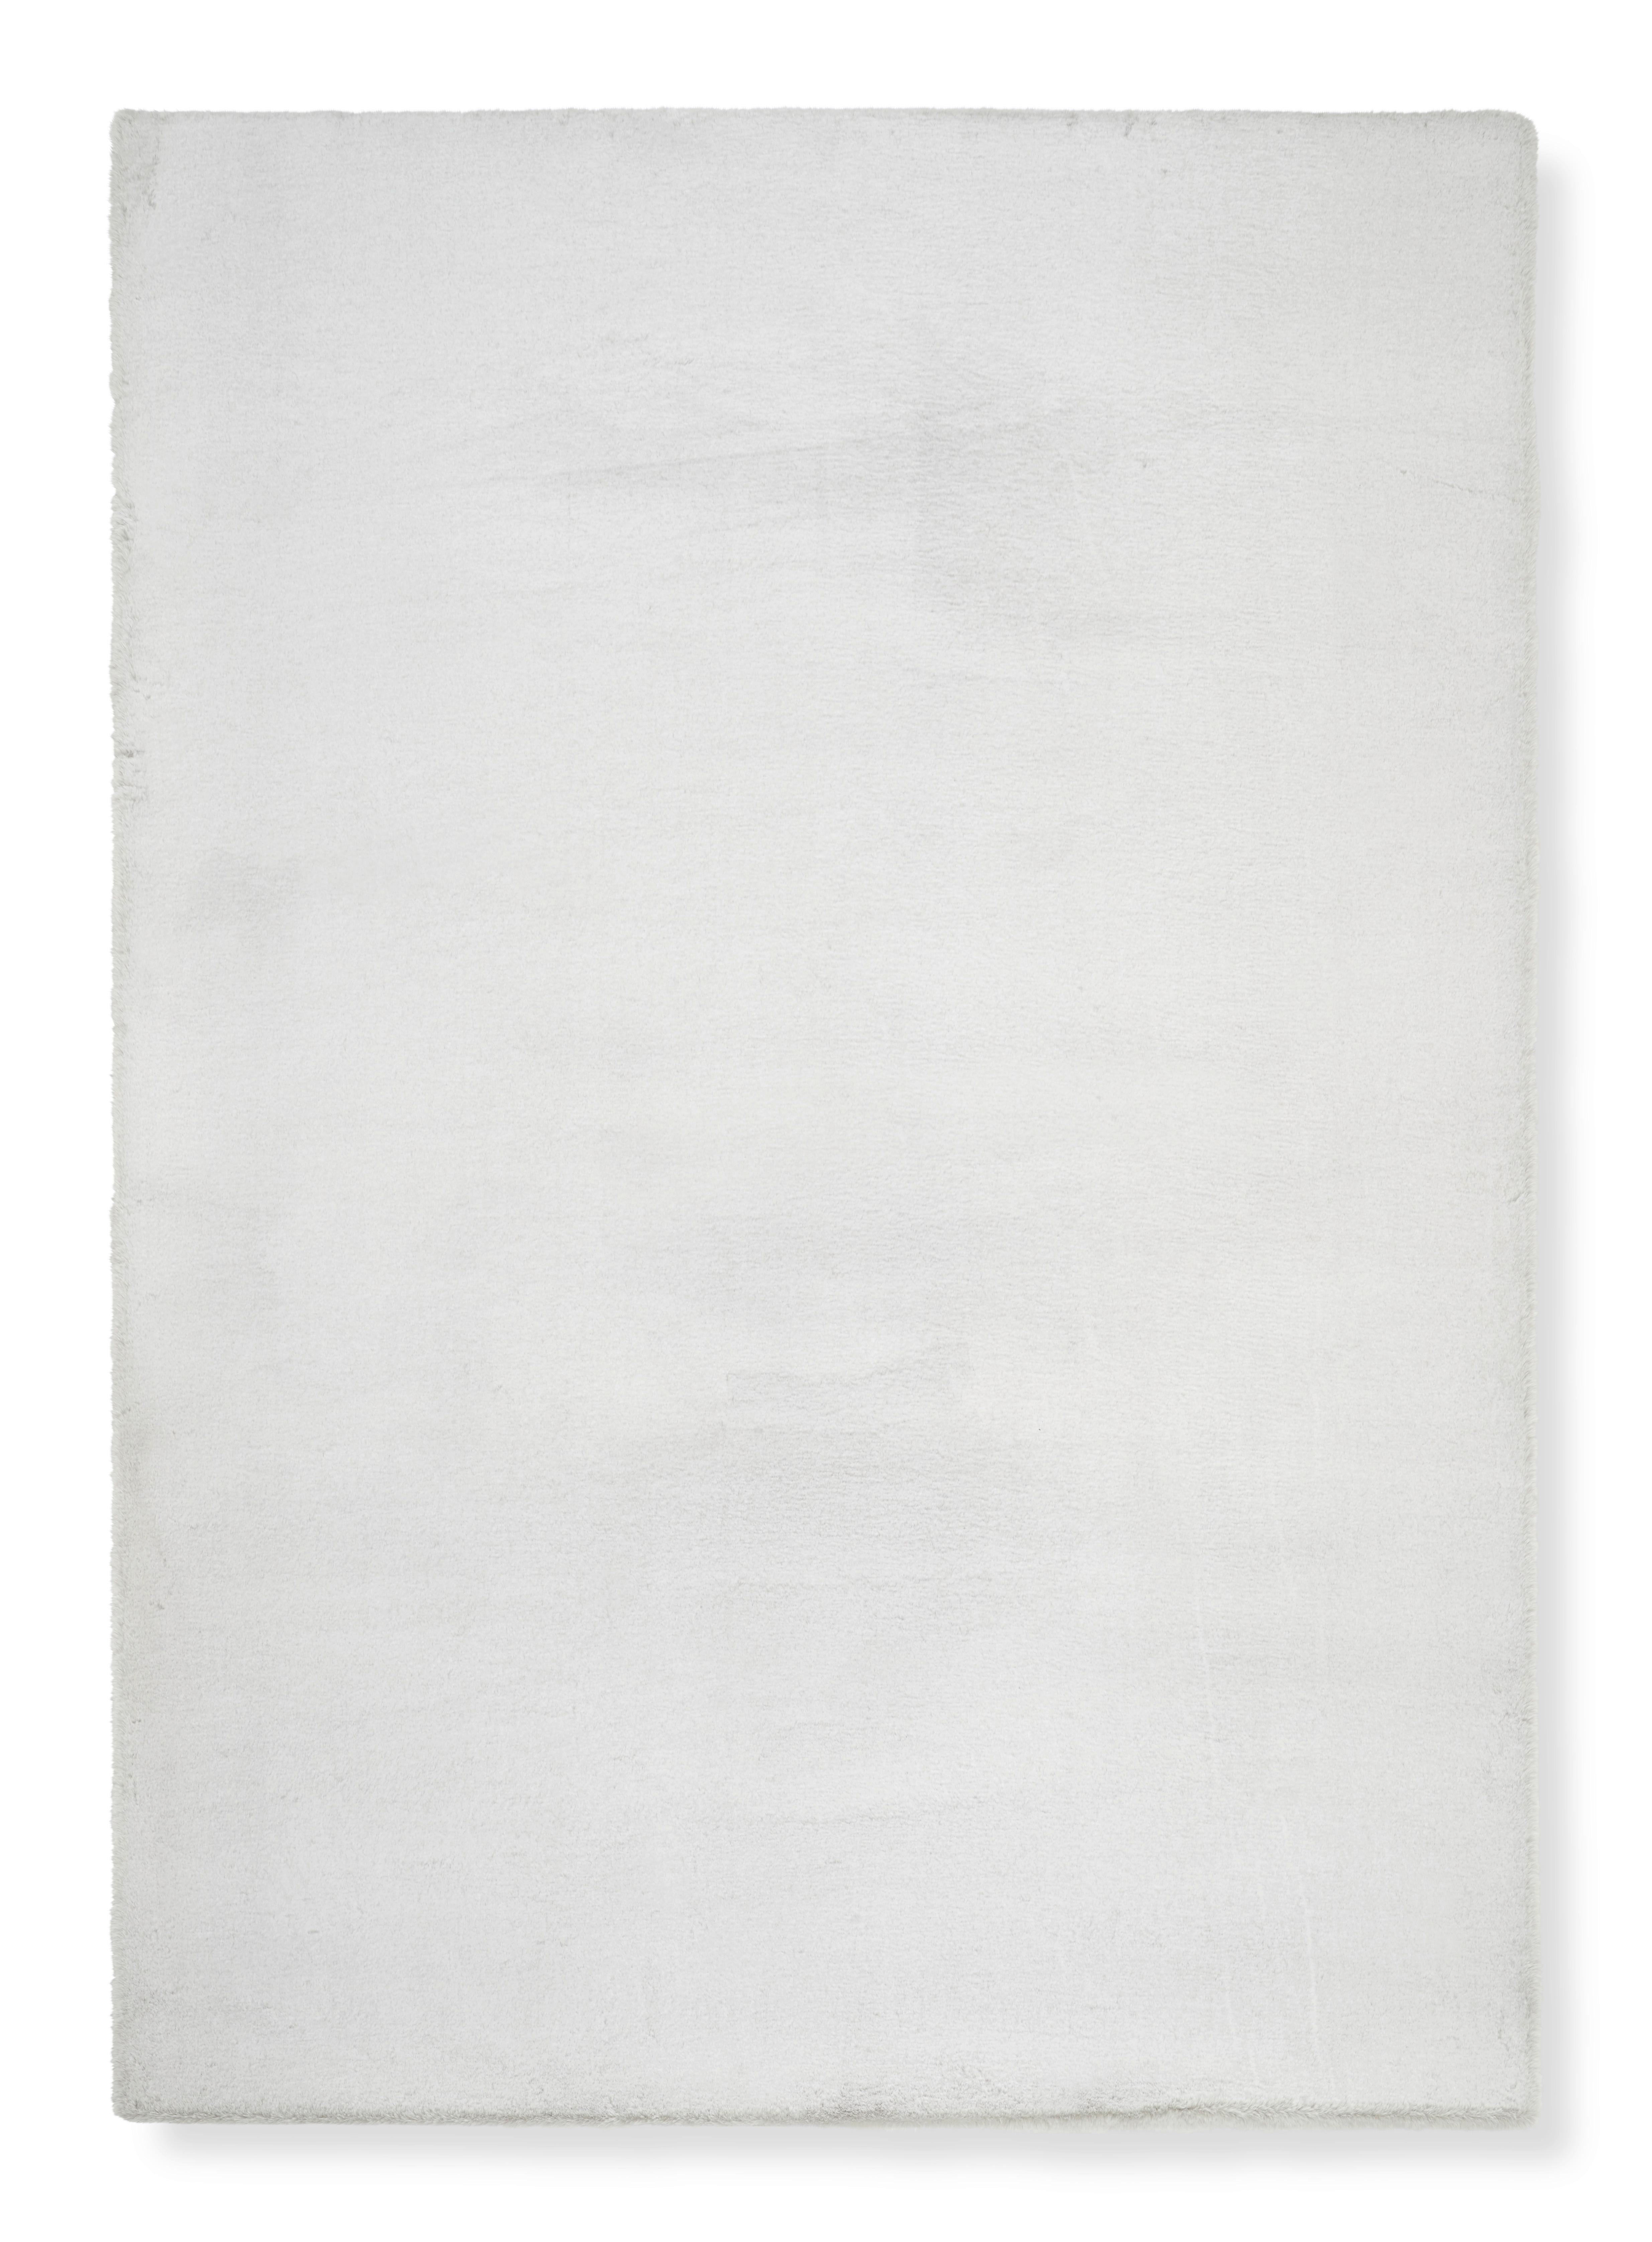 Blană artificială Denise - argintiu/alb, Romantik / Landhaus, textil/blană (80/150cm) - Modern Living